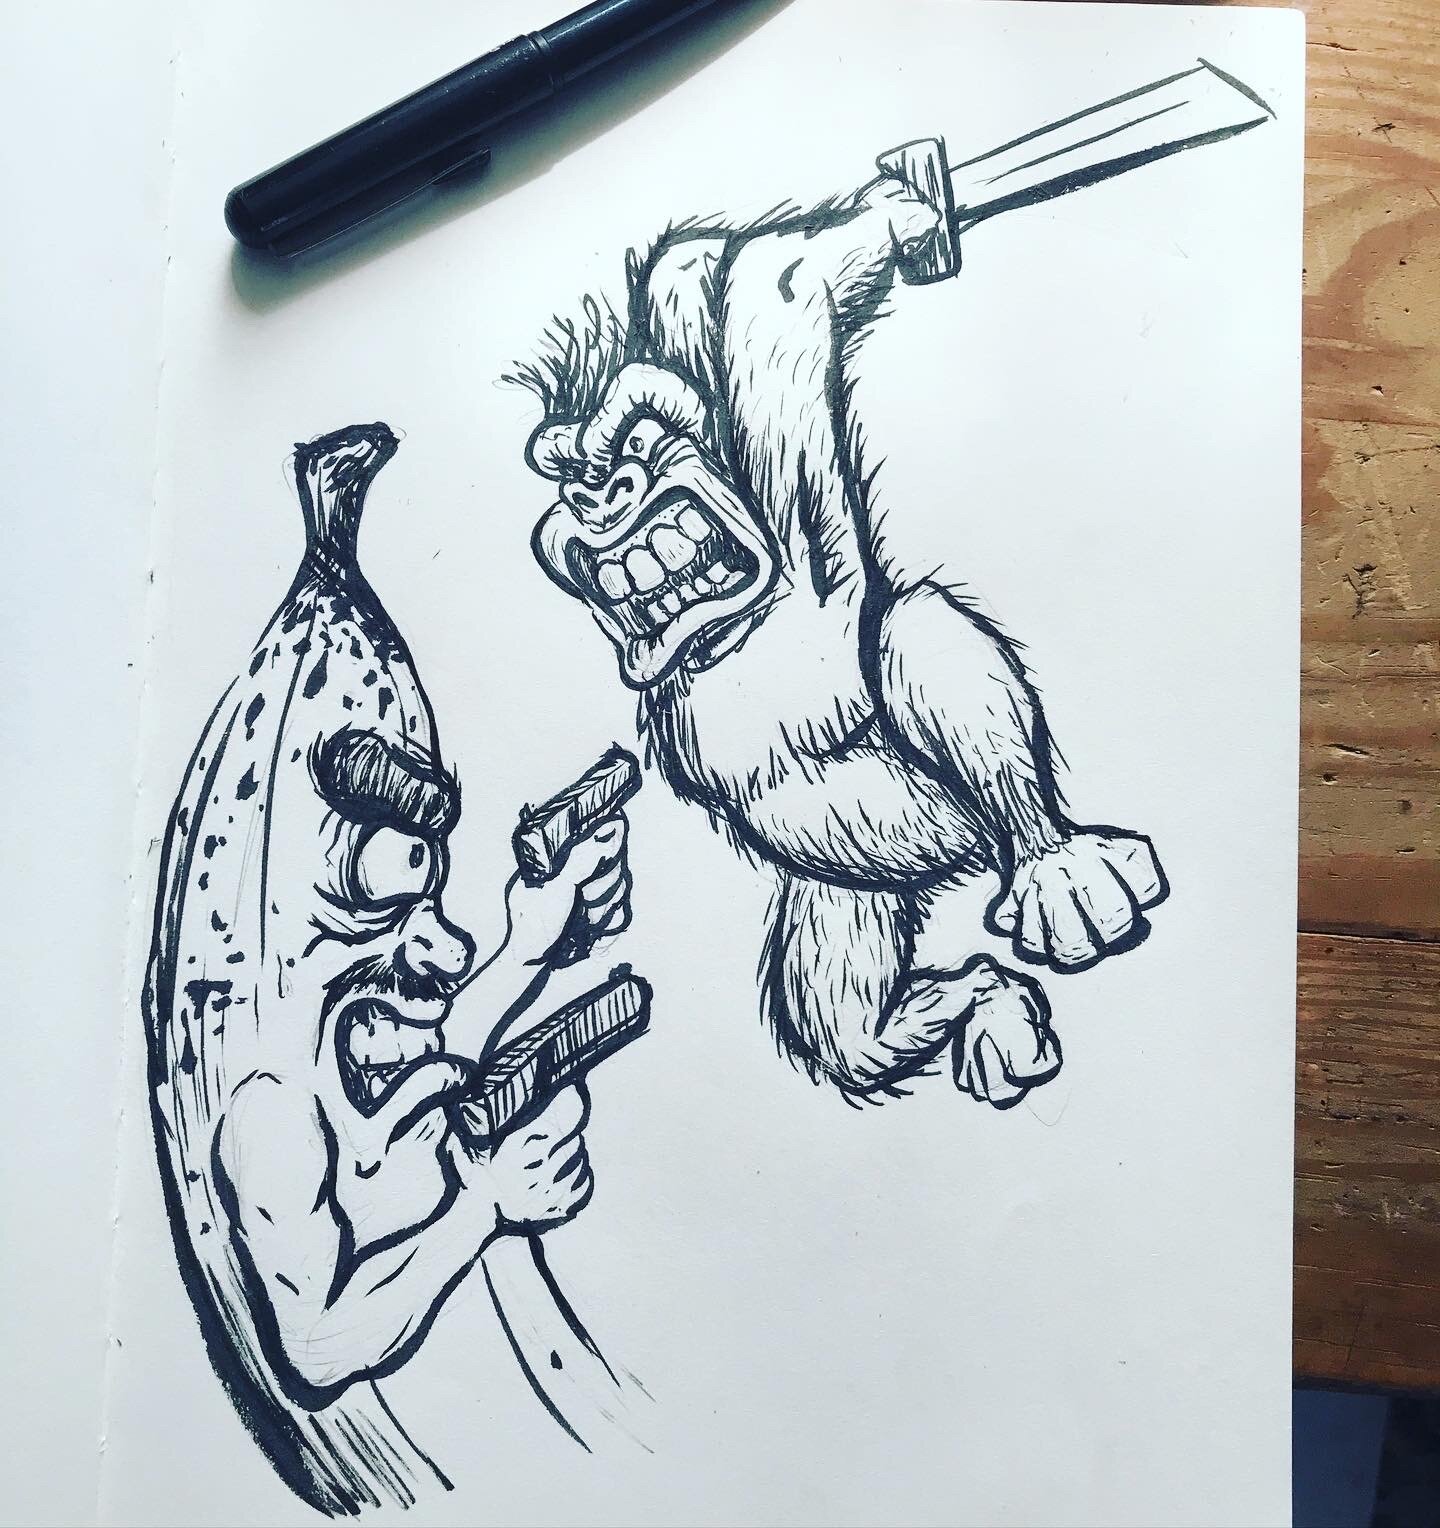  Ninja Chimp vs. Bananaman 